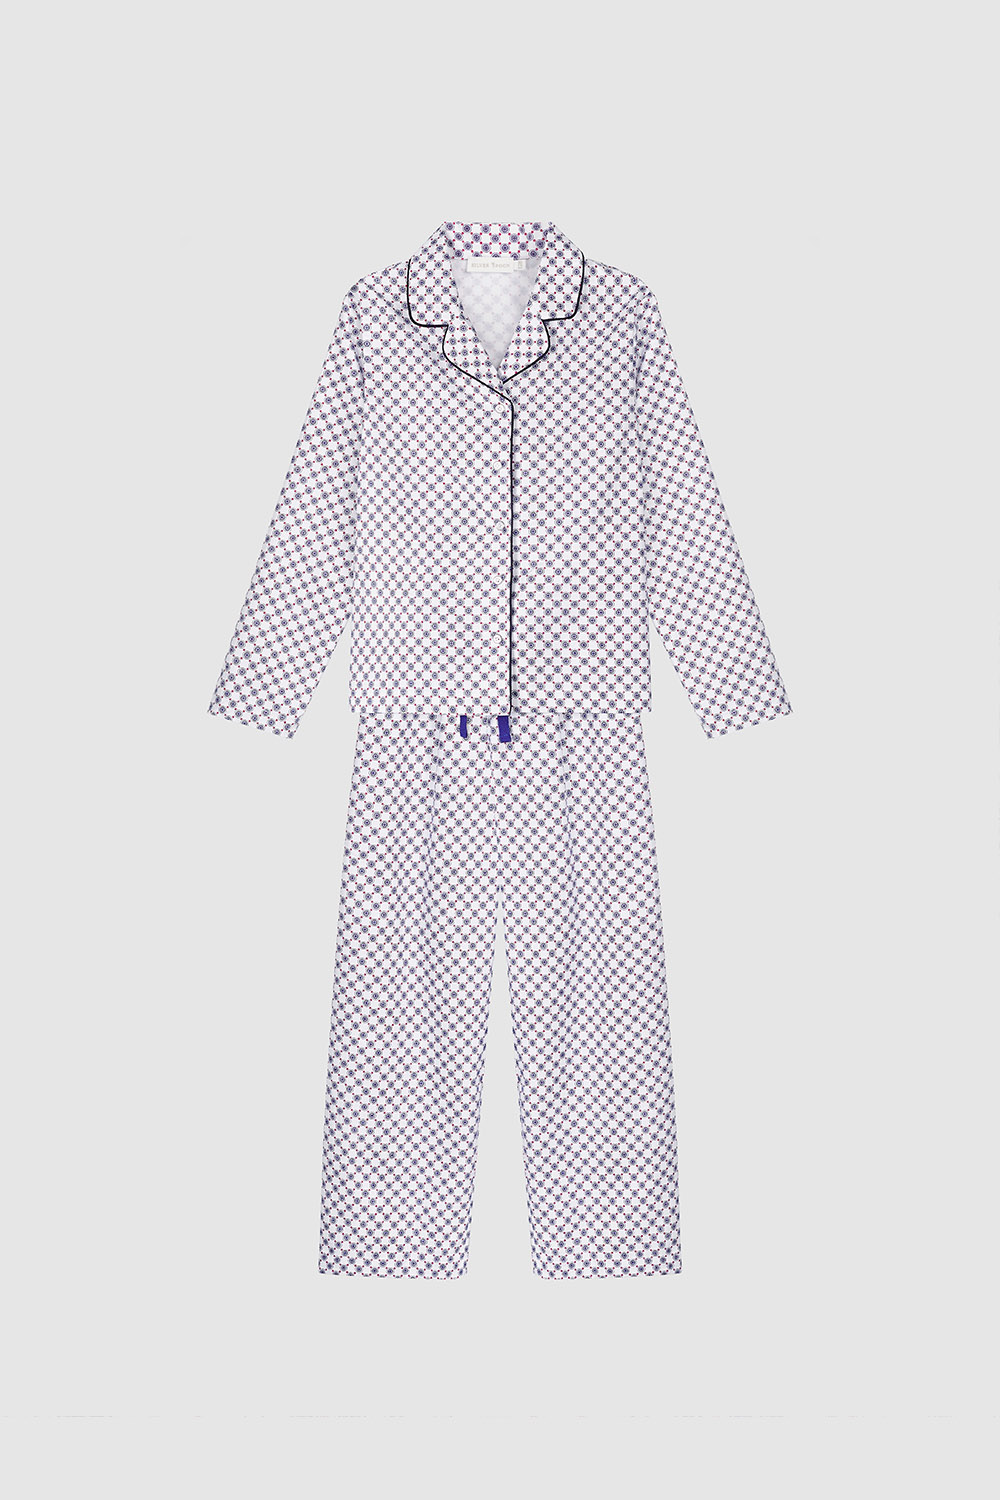 Хлопковая пижама унисекс (SRBSG-329-22307-960) Silver Spoon